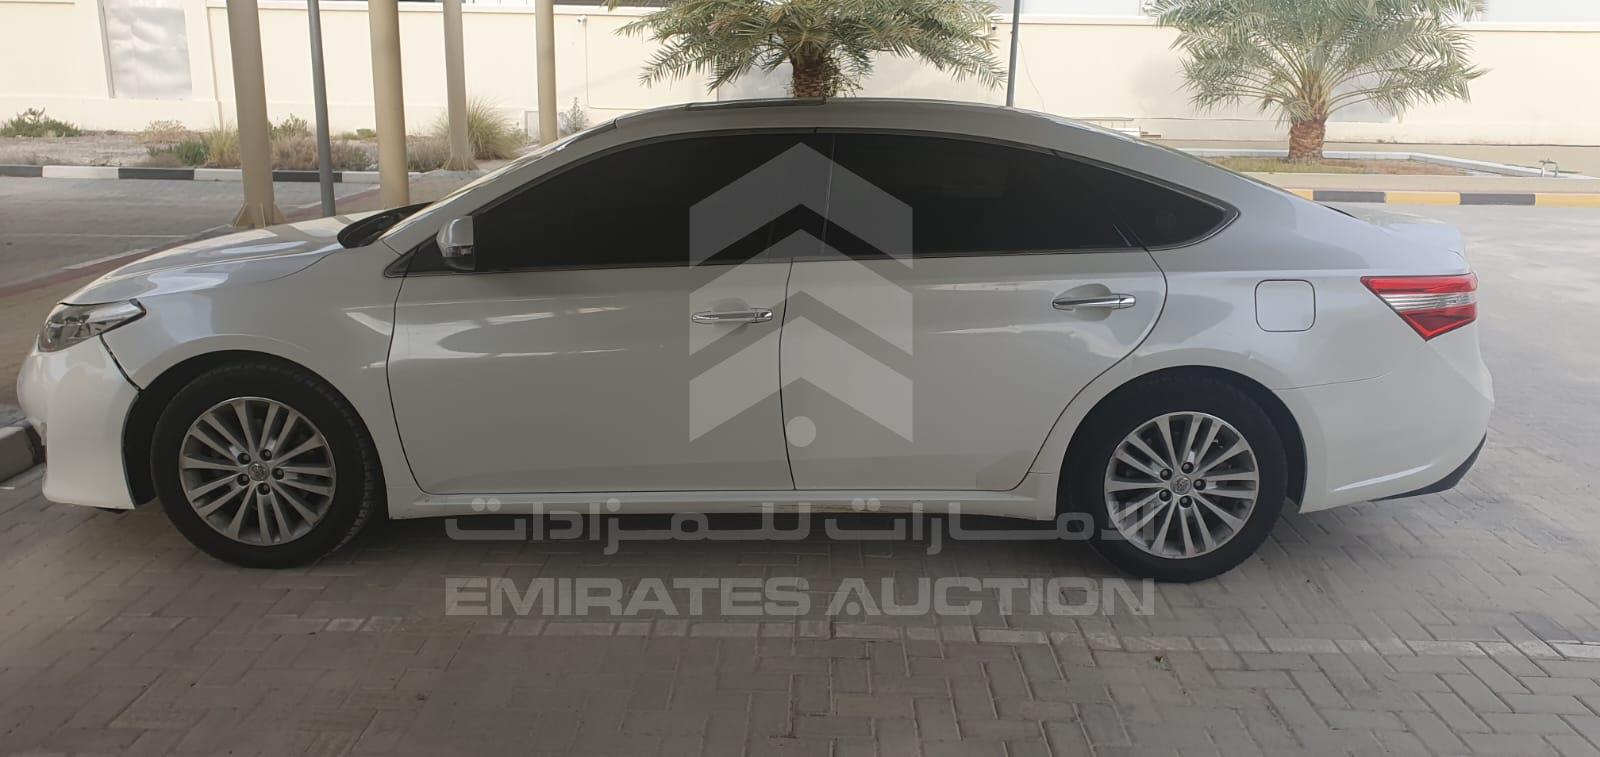 Toyota Yaris, Avalon, Previa and Sienna price 5000 dirhams auction